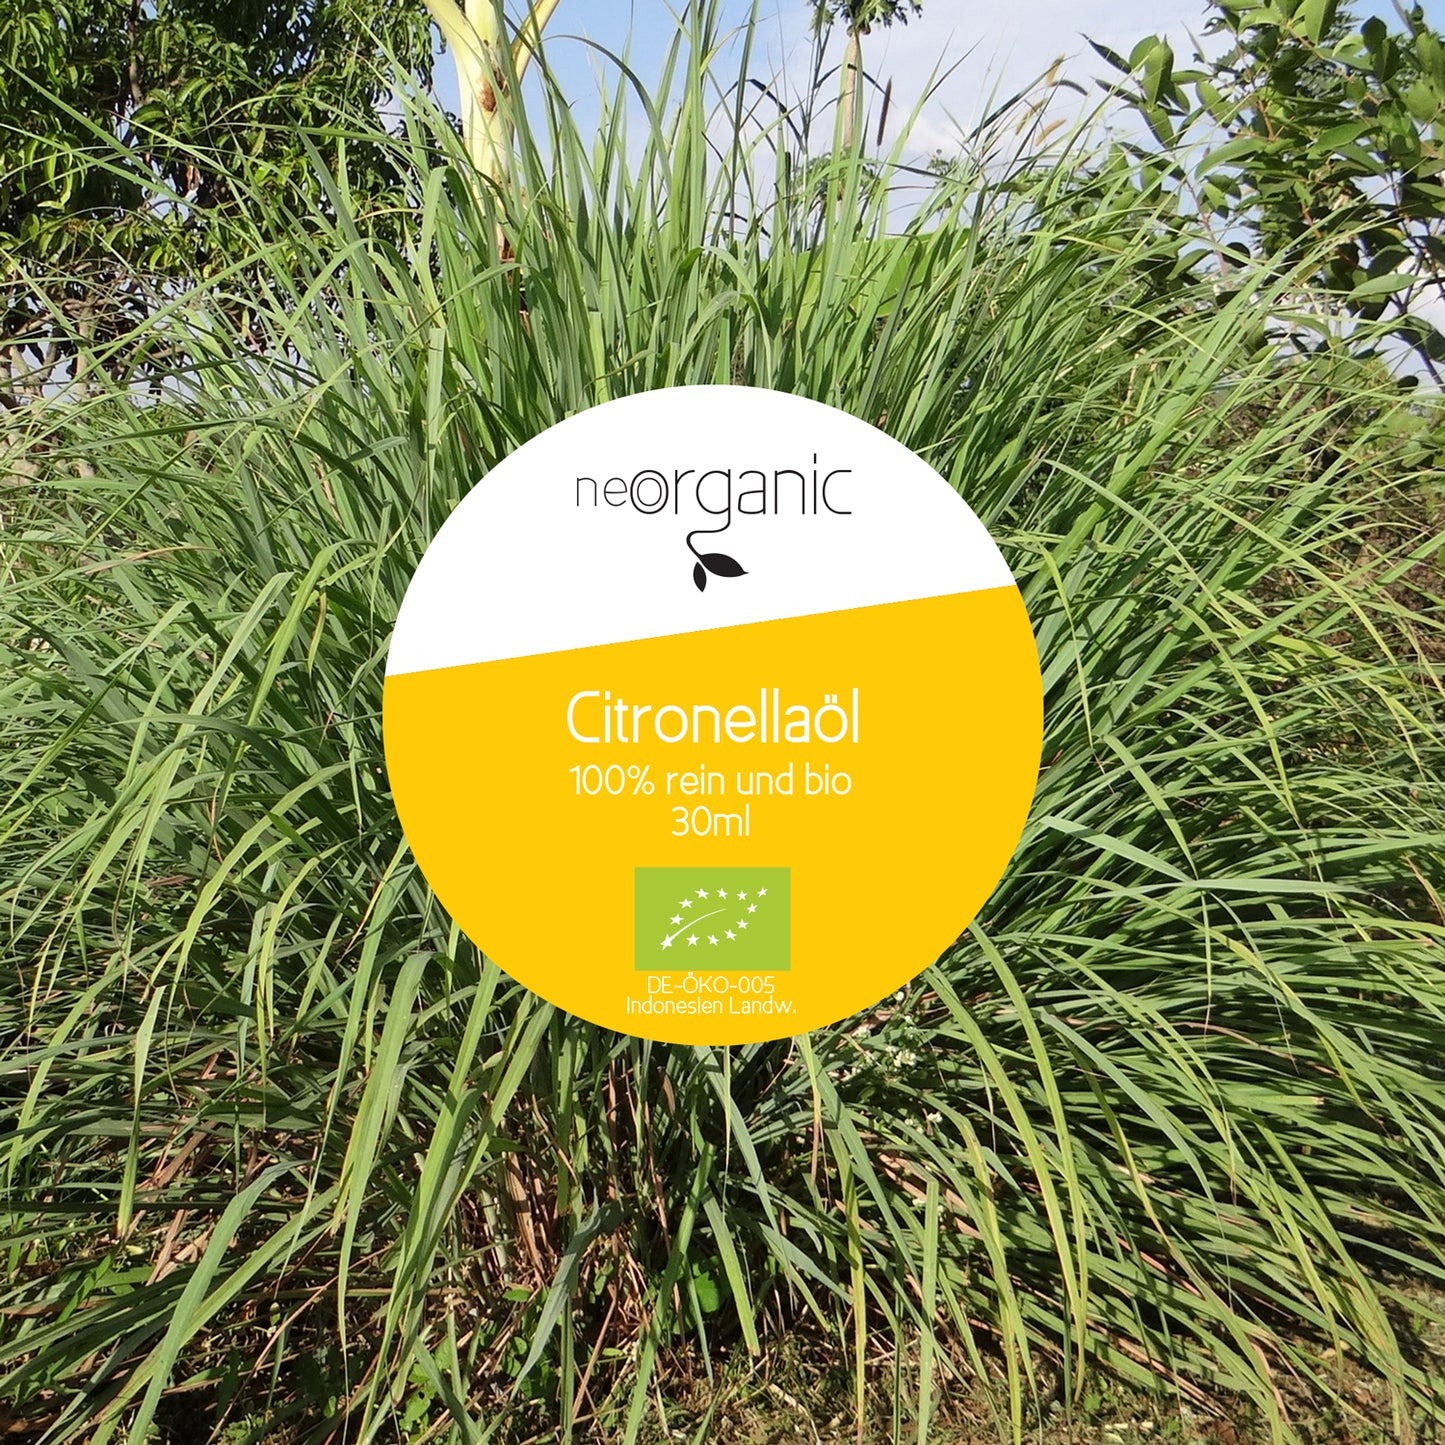 Bio Citronella-Öl (Cymbopogon winterianus jowitt)